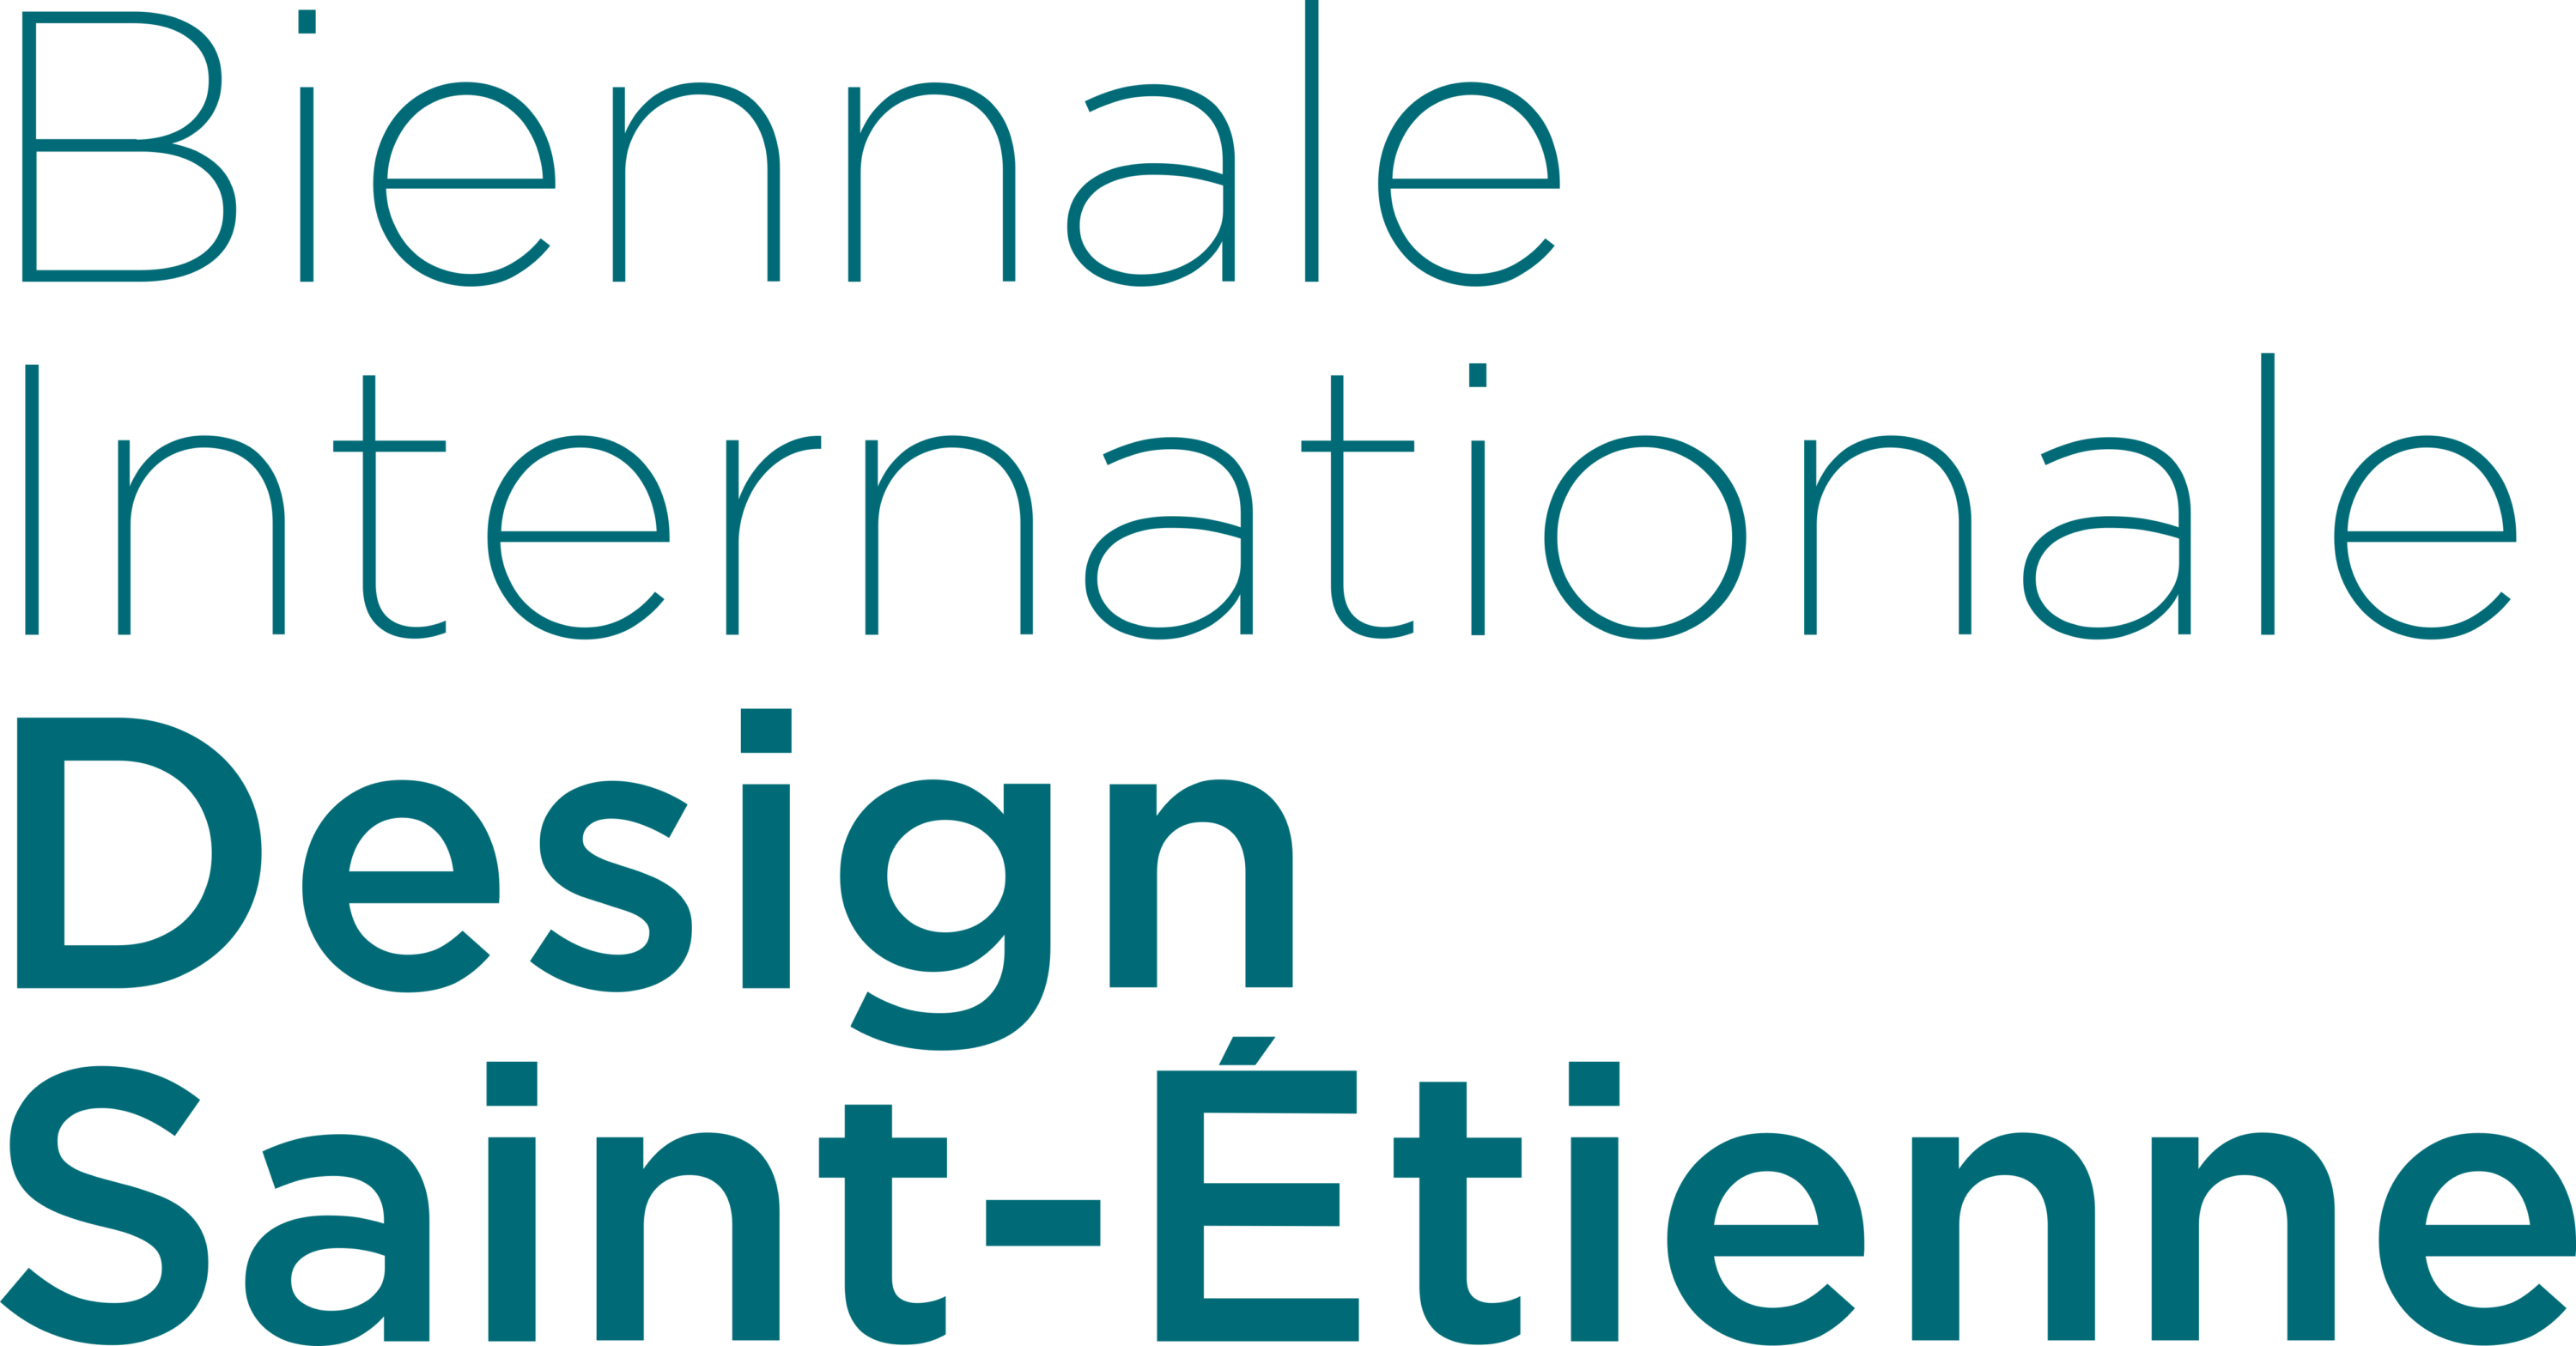 Biennale Internationale Design Saint Etienne Logo